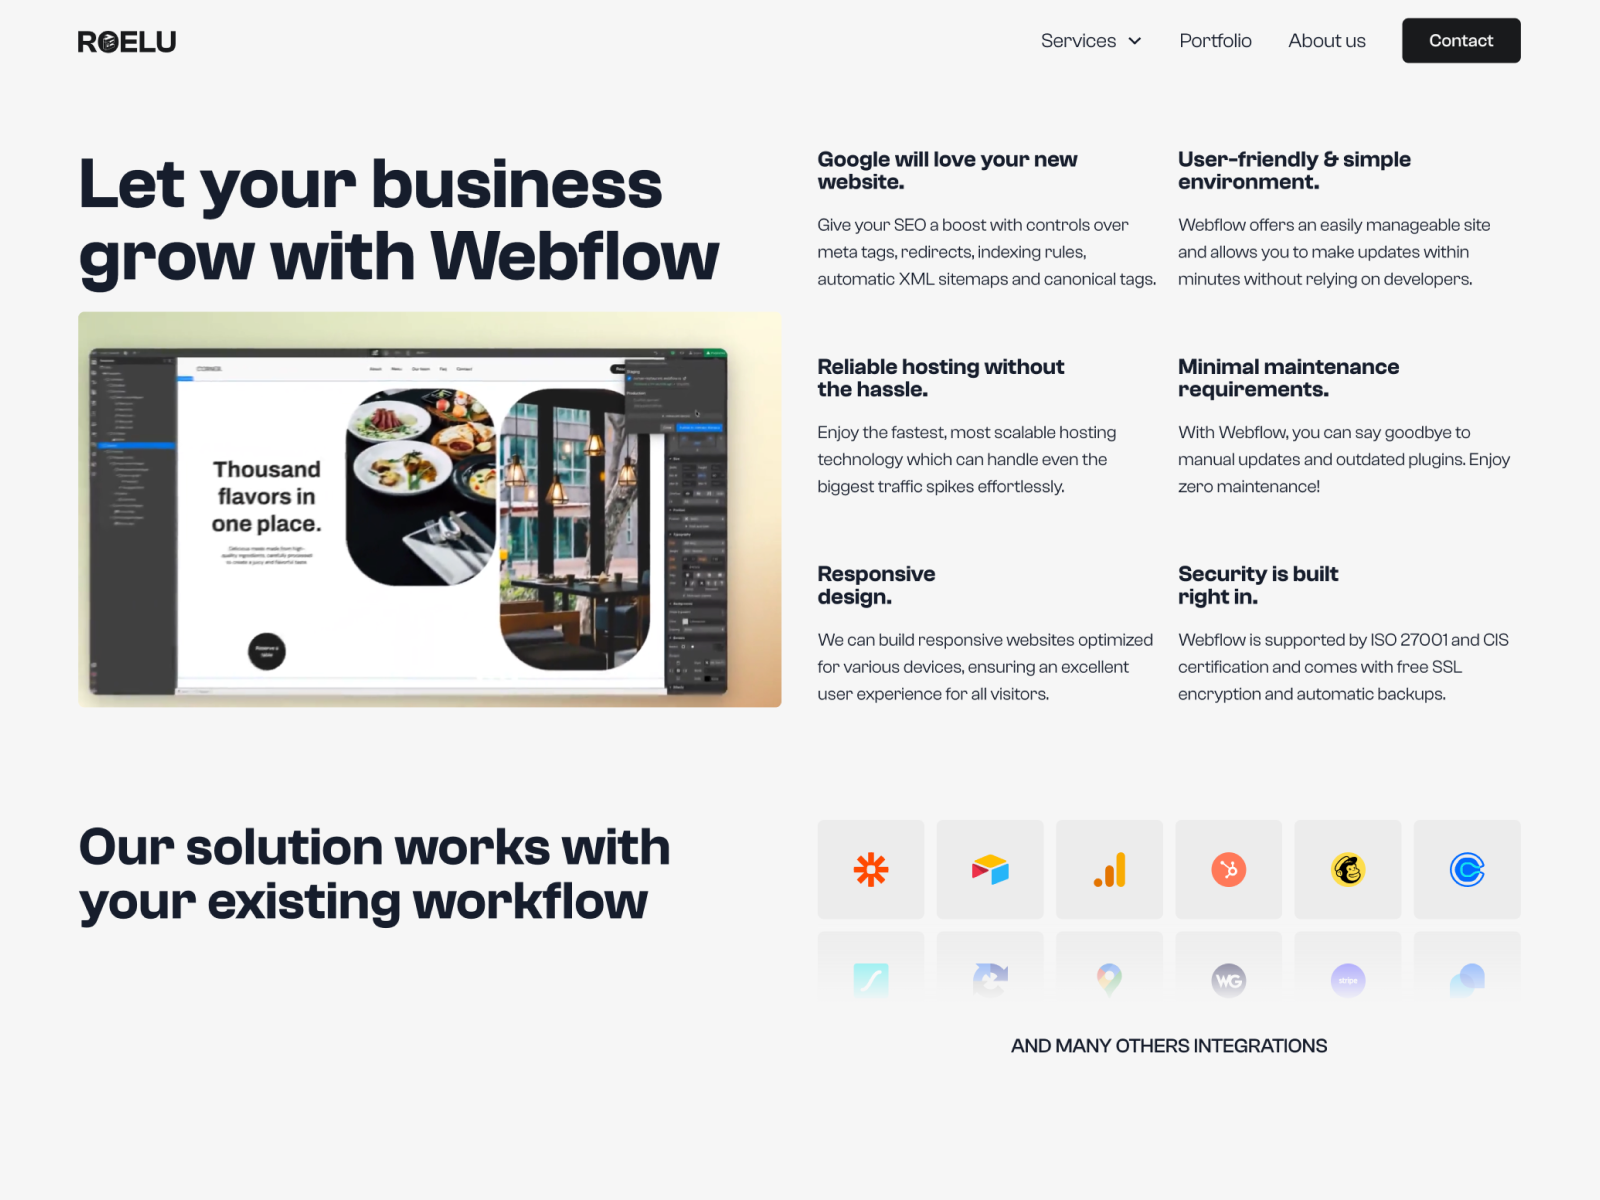 Business grow with Webflow